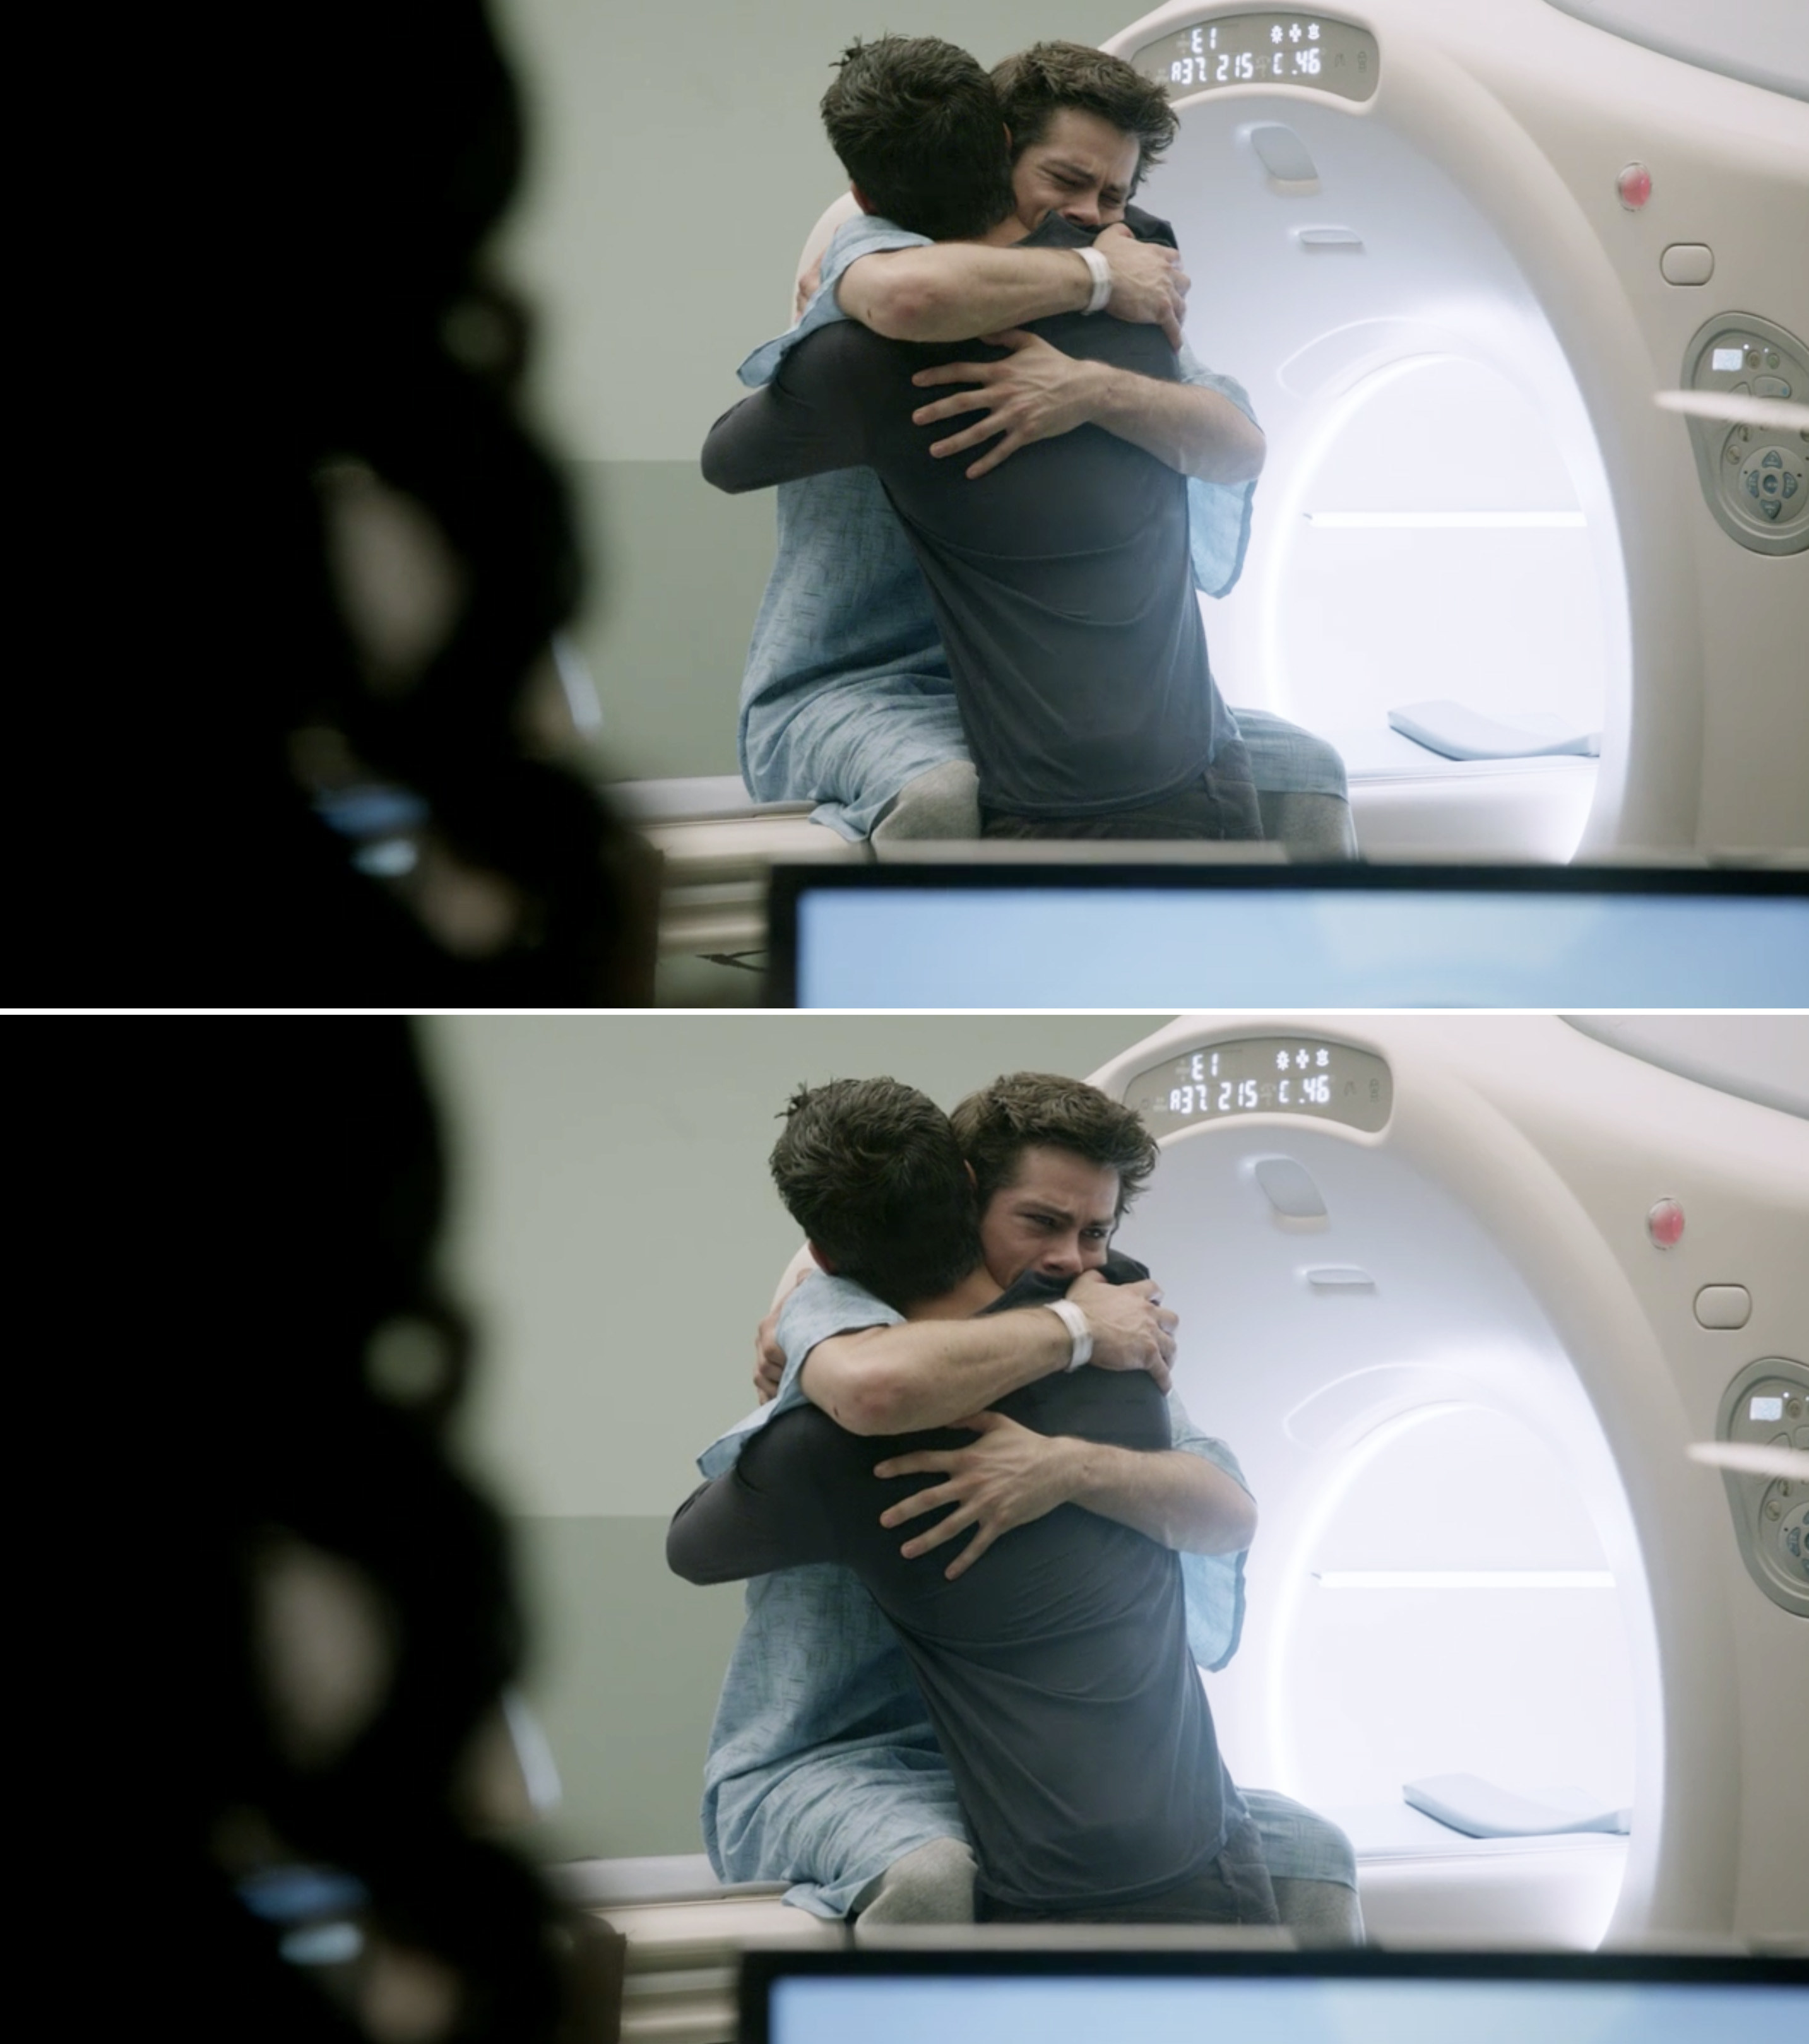 Stiles hugging Scott outside of an MRI machine